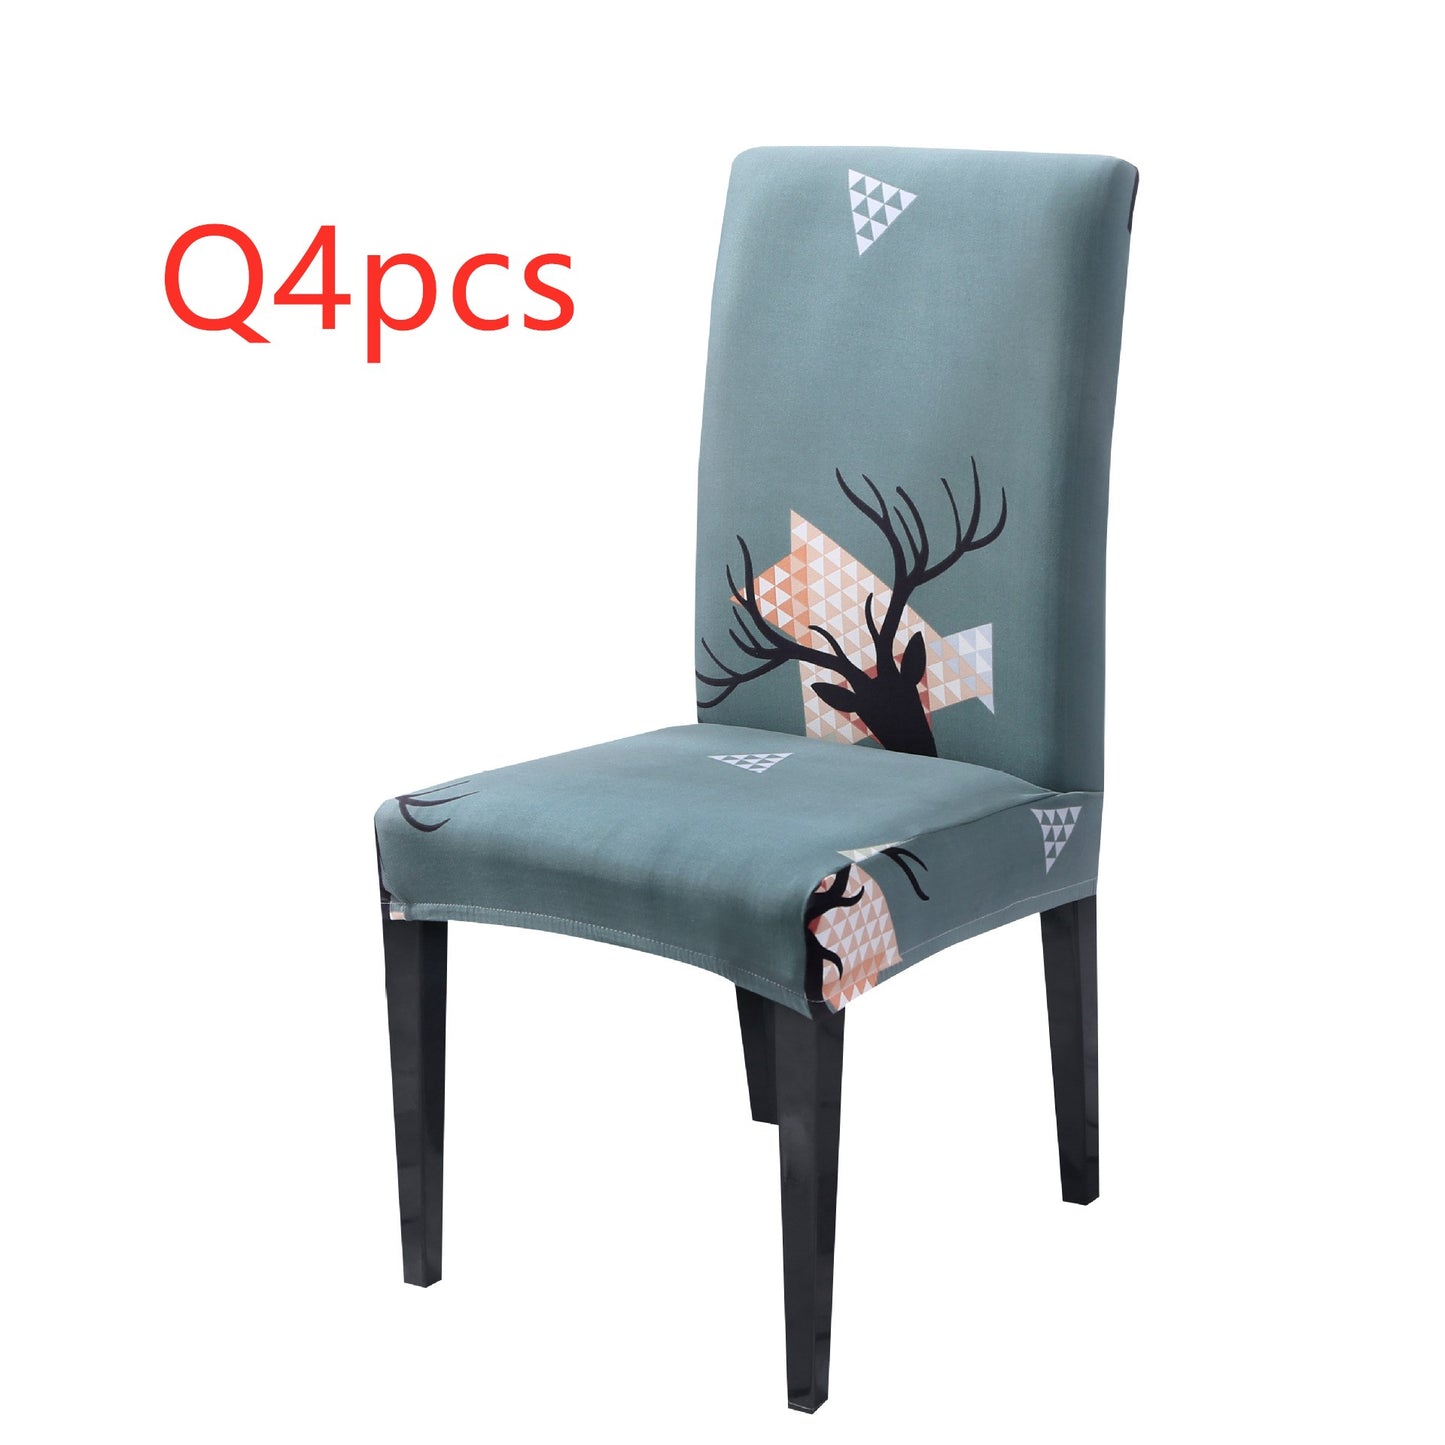 Christmas universal elastic chair cover